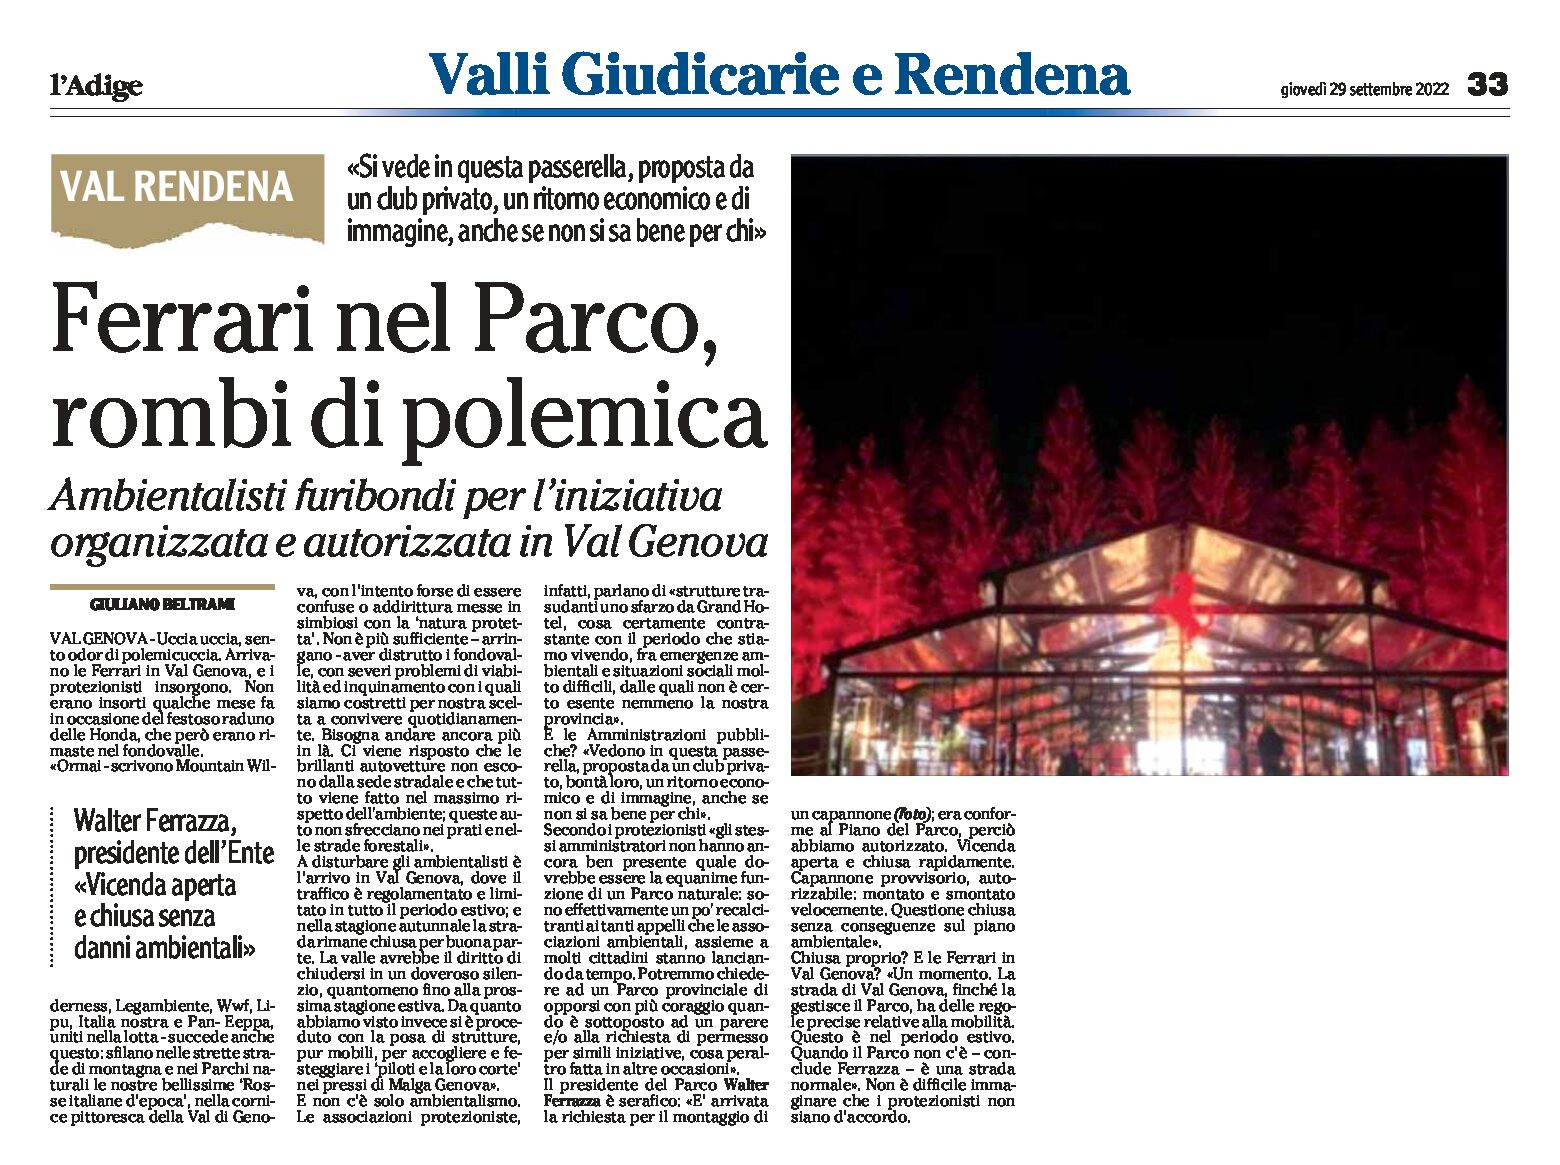 Val Genova: Ferrari nel Parco, rombi di polemica. Ambientalisti furibondi